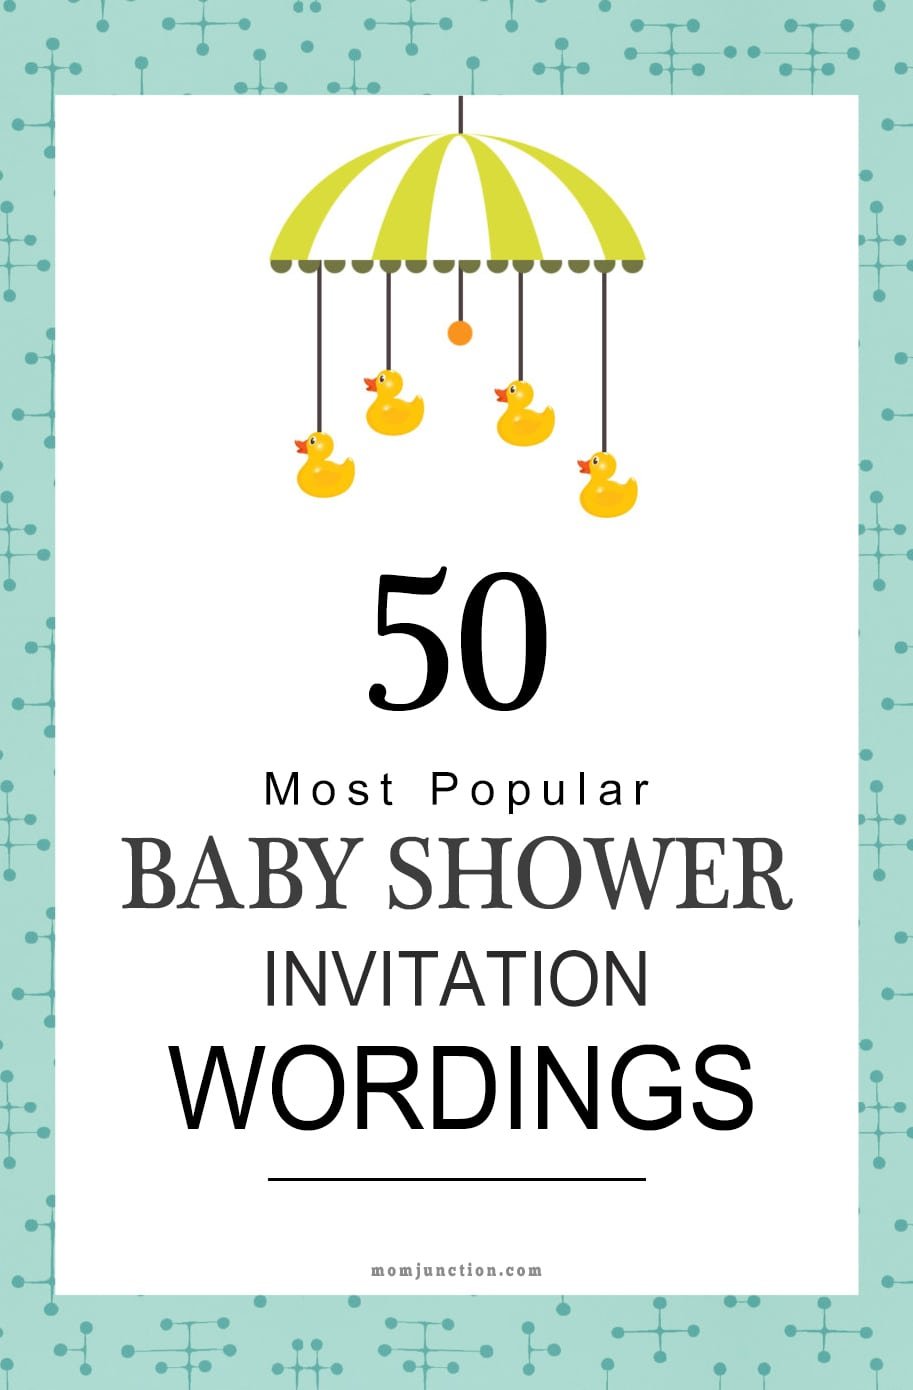 75 Most Popular Baby Shower Invitation Wordings